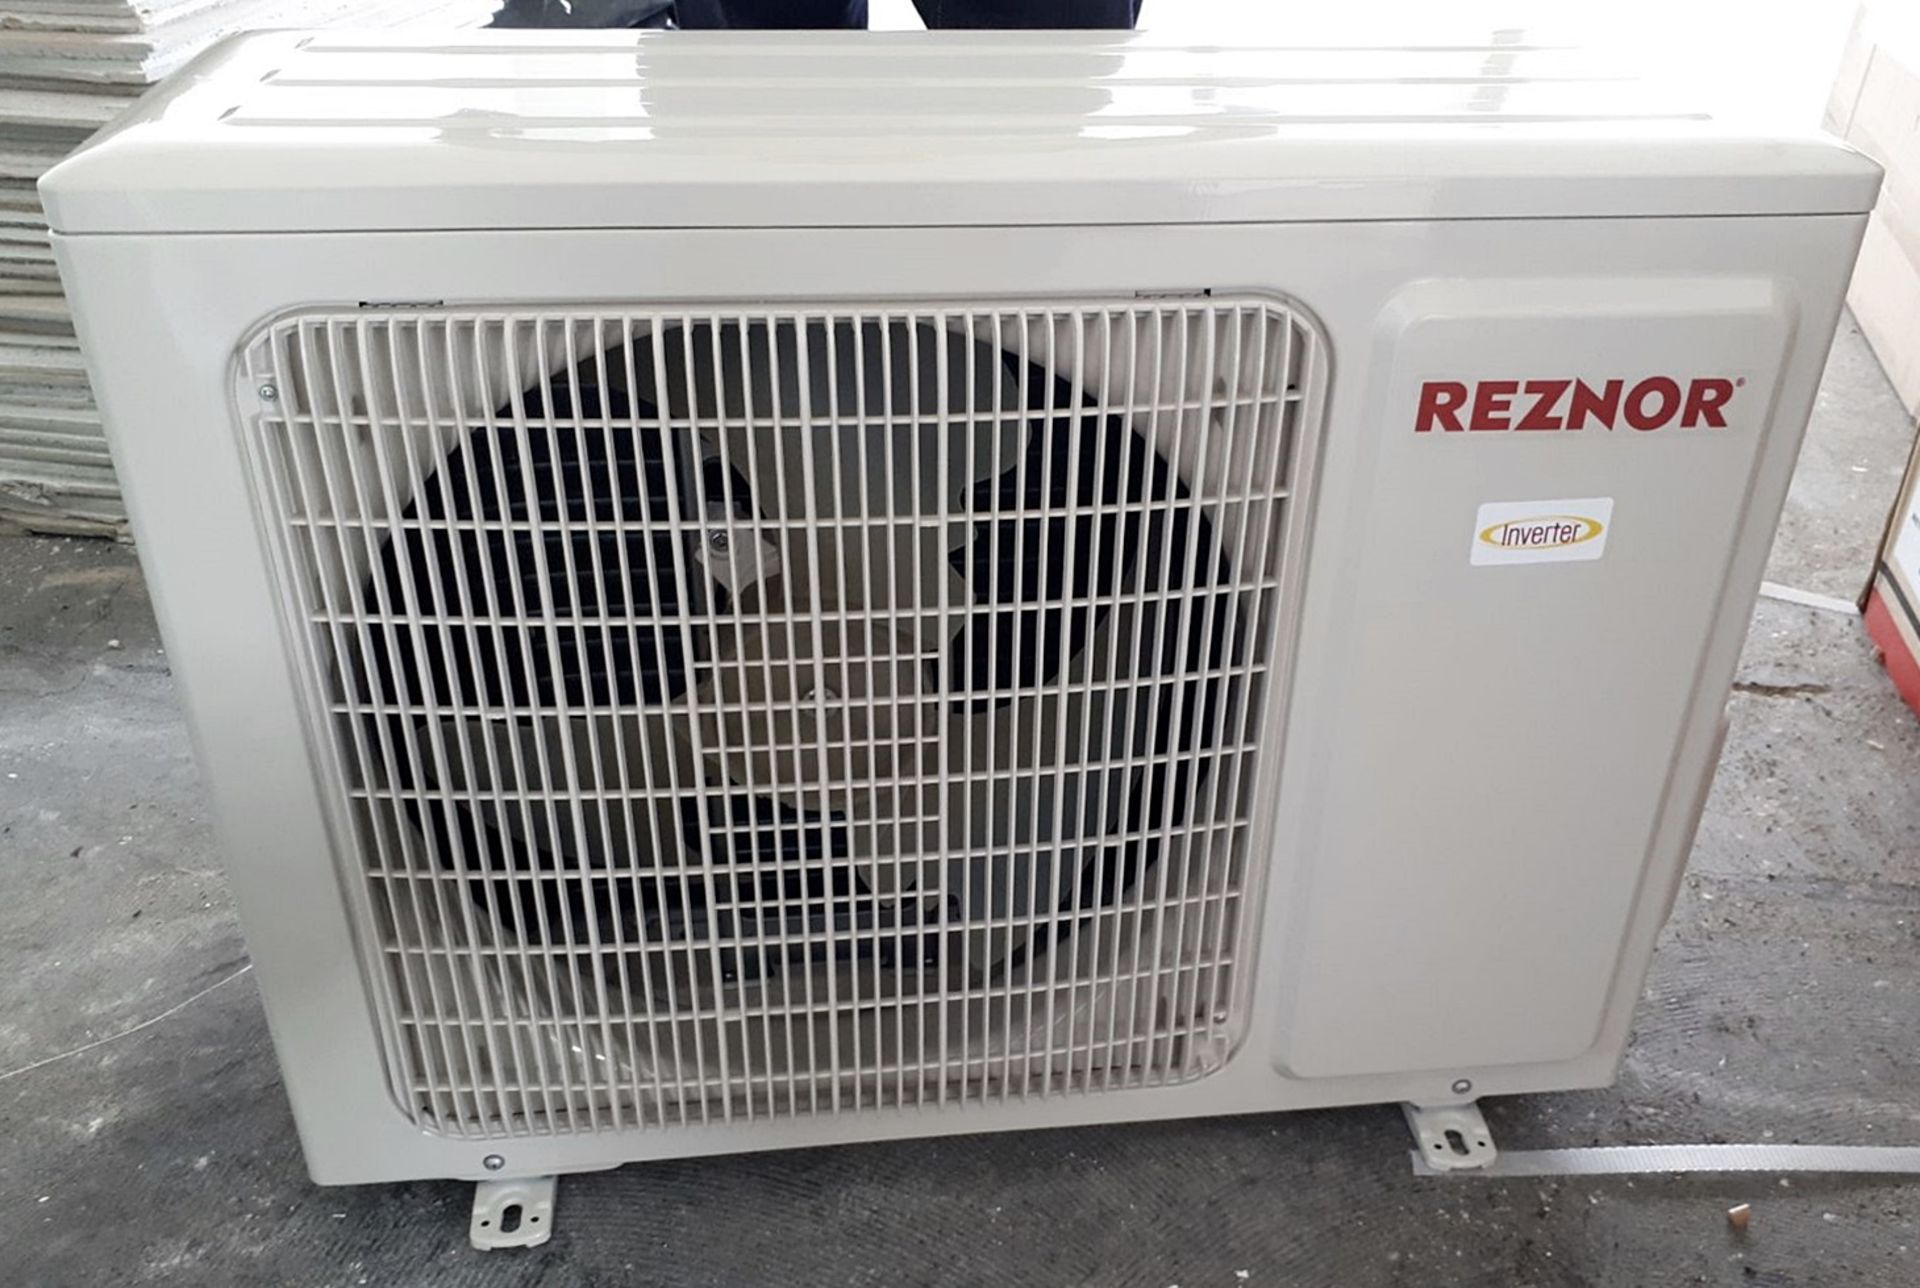 10 x Nortek 'Reznor' Air Conditioning 3.5kw Mini Split Systems - Model RHH12 - Brand New Boxed Stock